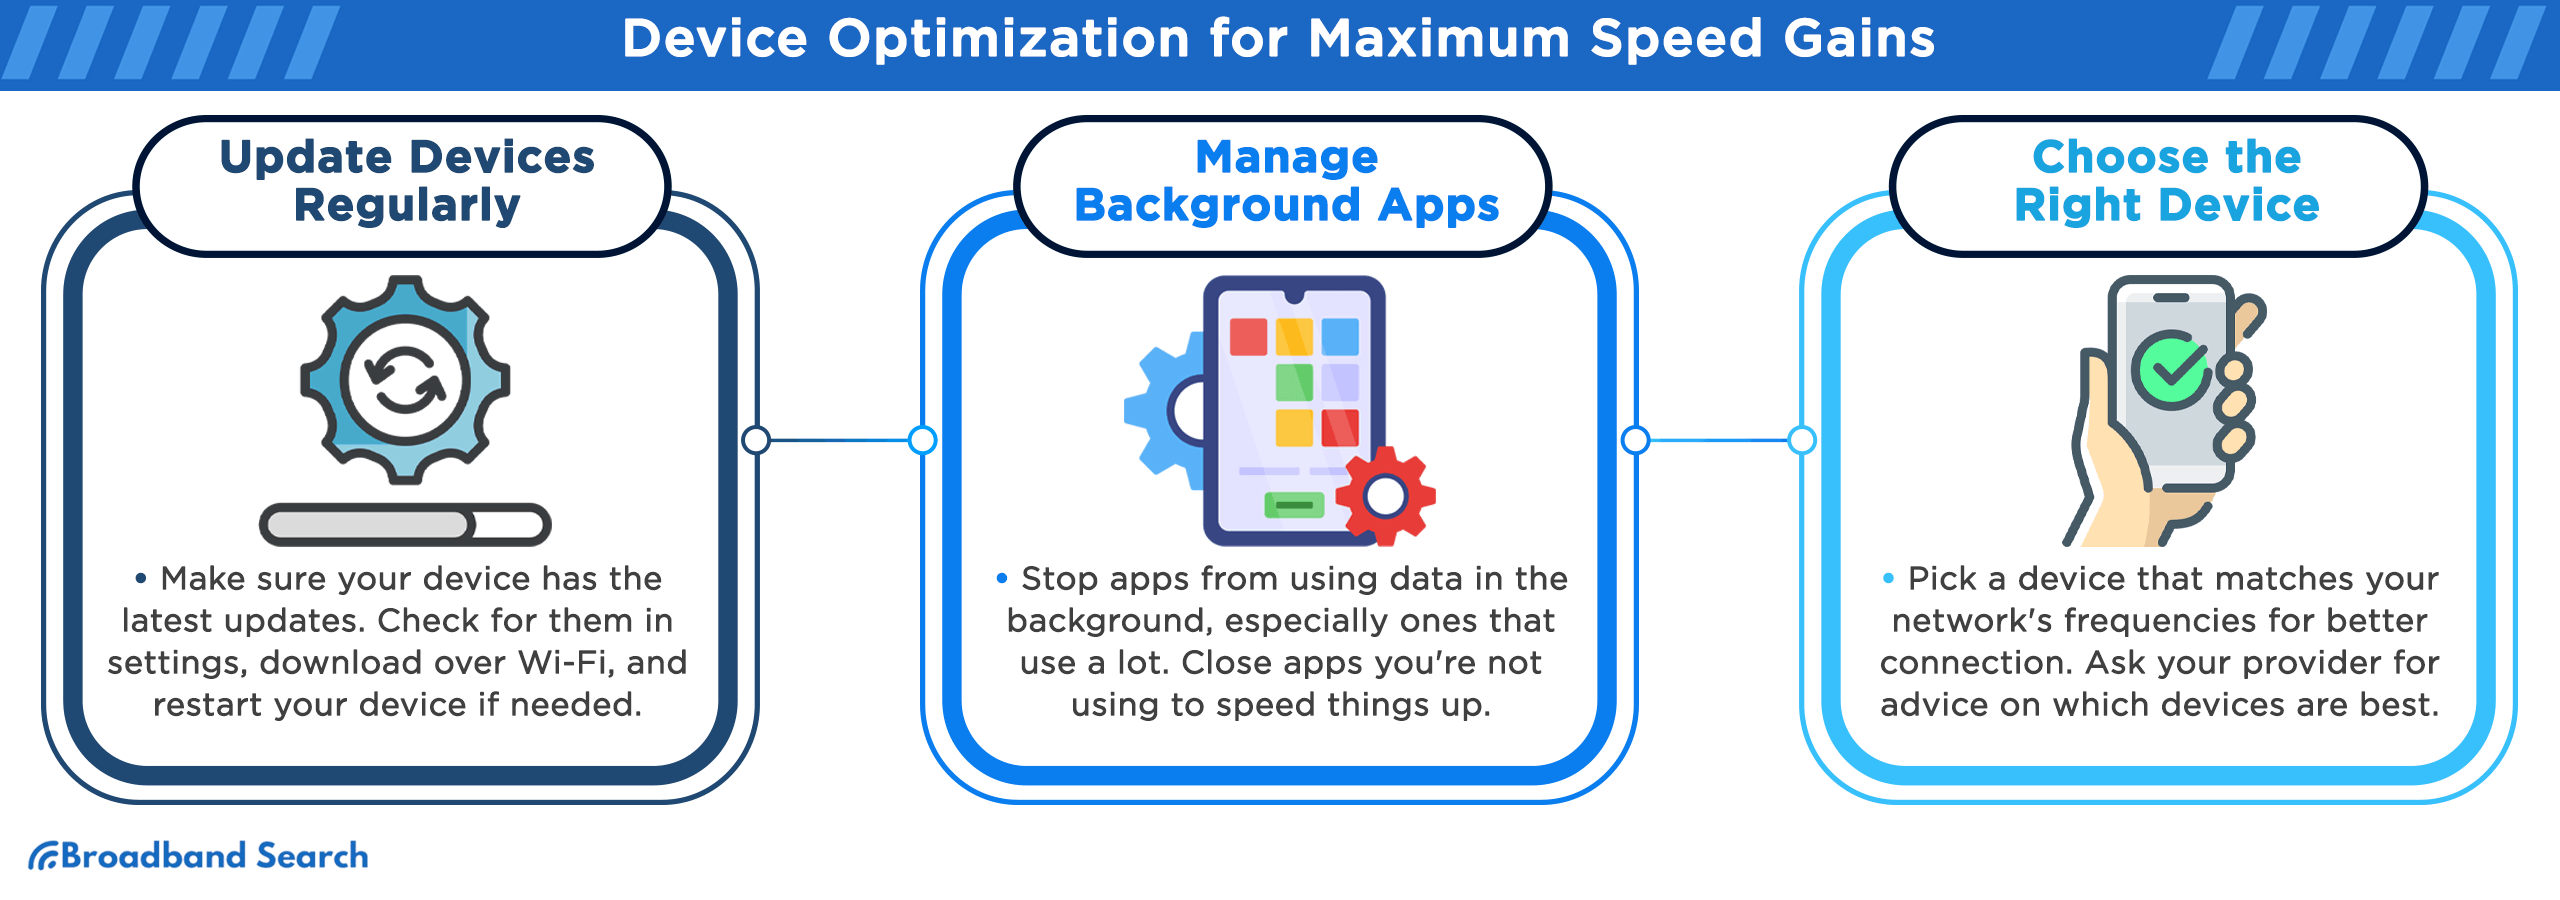 Device optimization for maximum speed gains